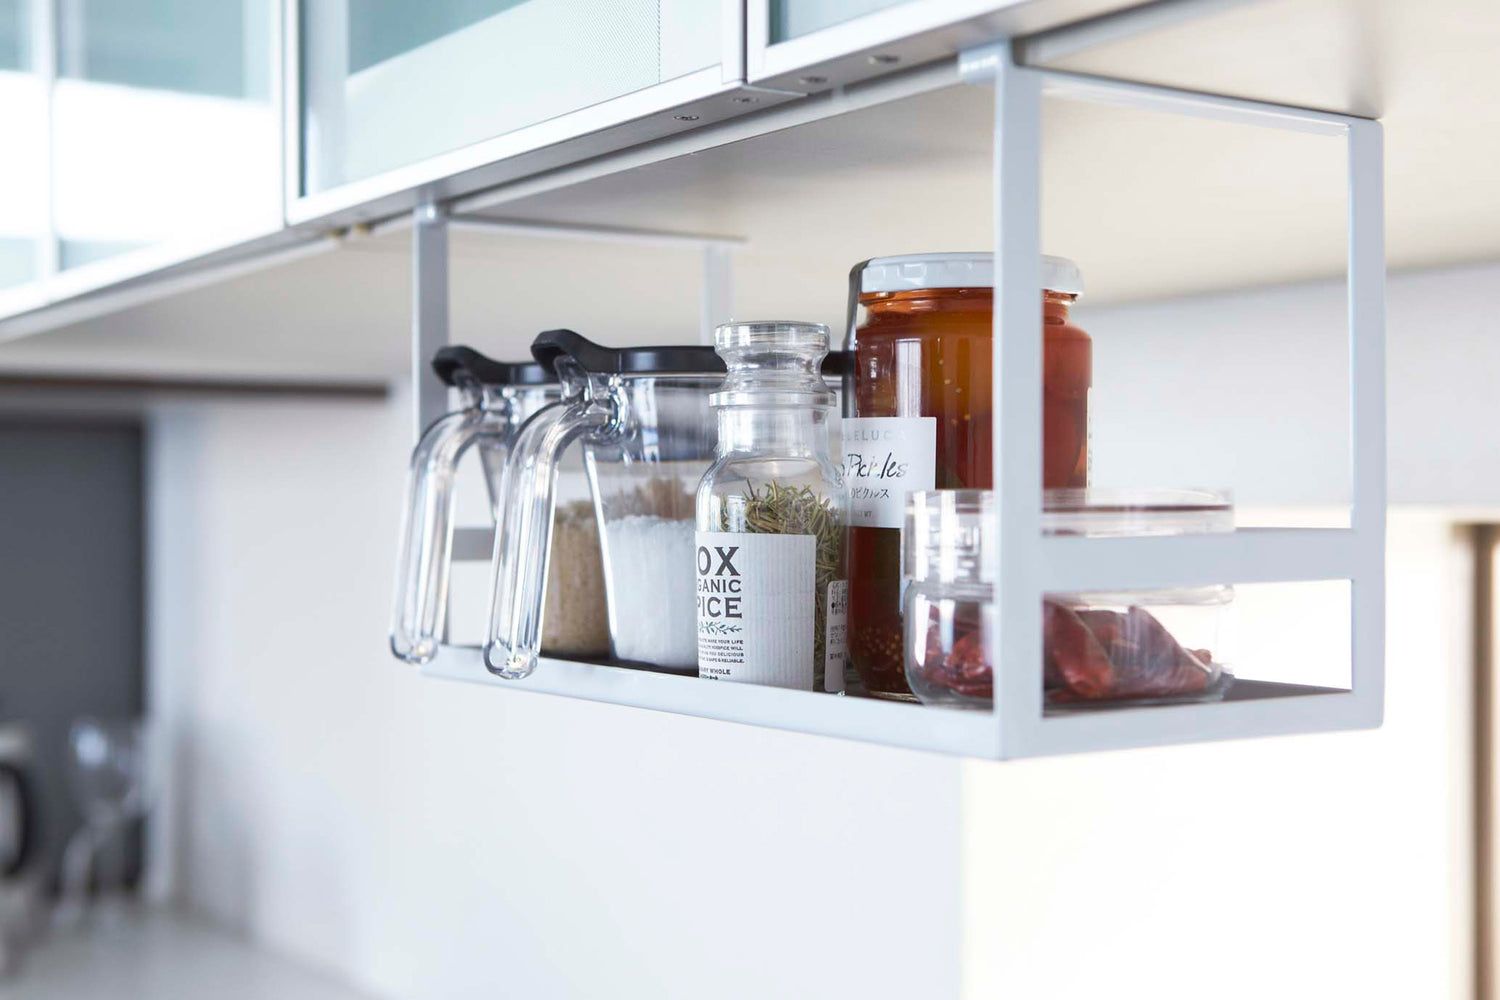 View 4 - White Slim Dish Rack on kitchen counter holding plates and utensils by Yamazaki Home.